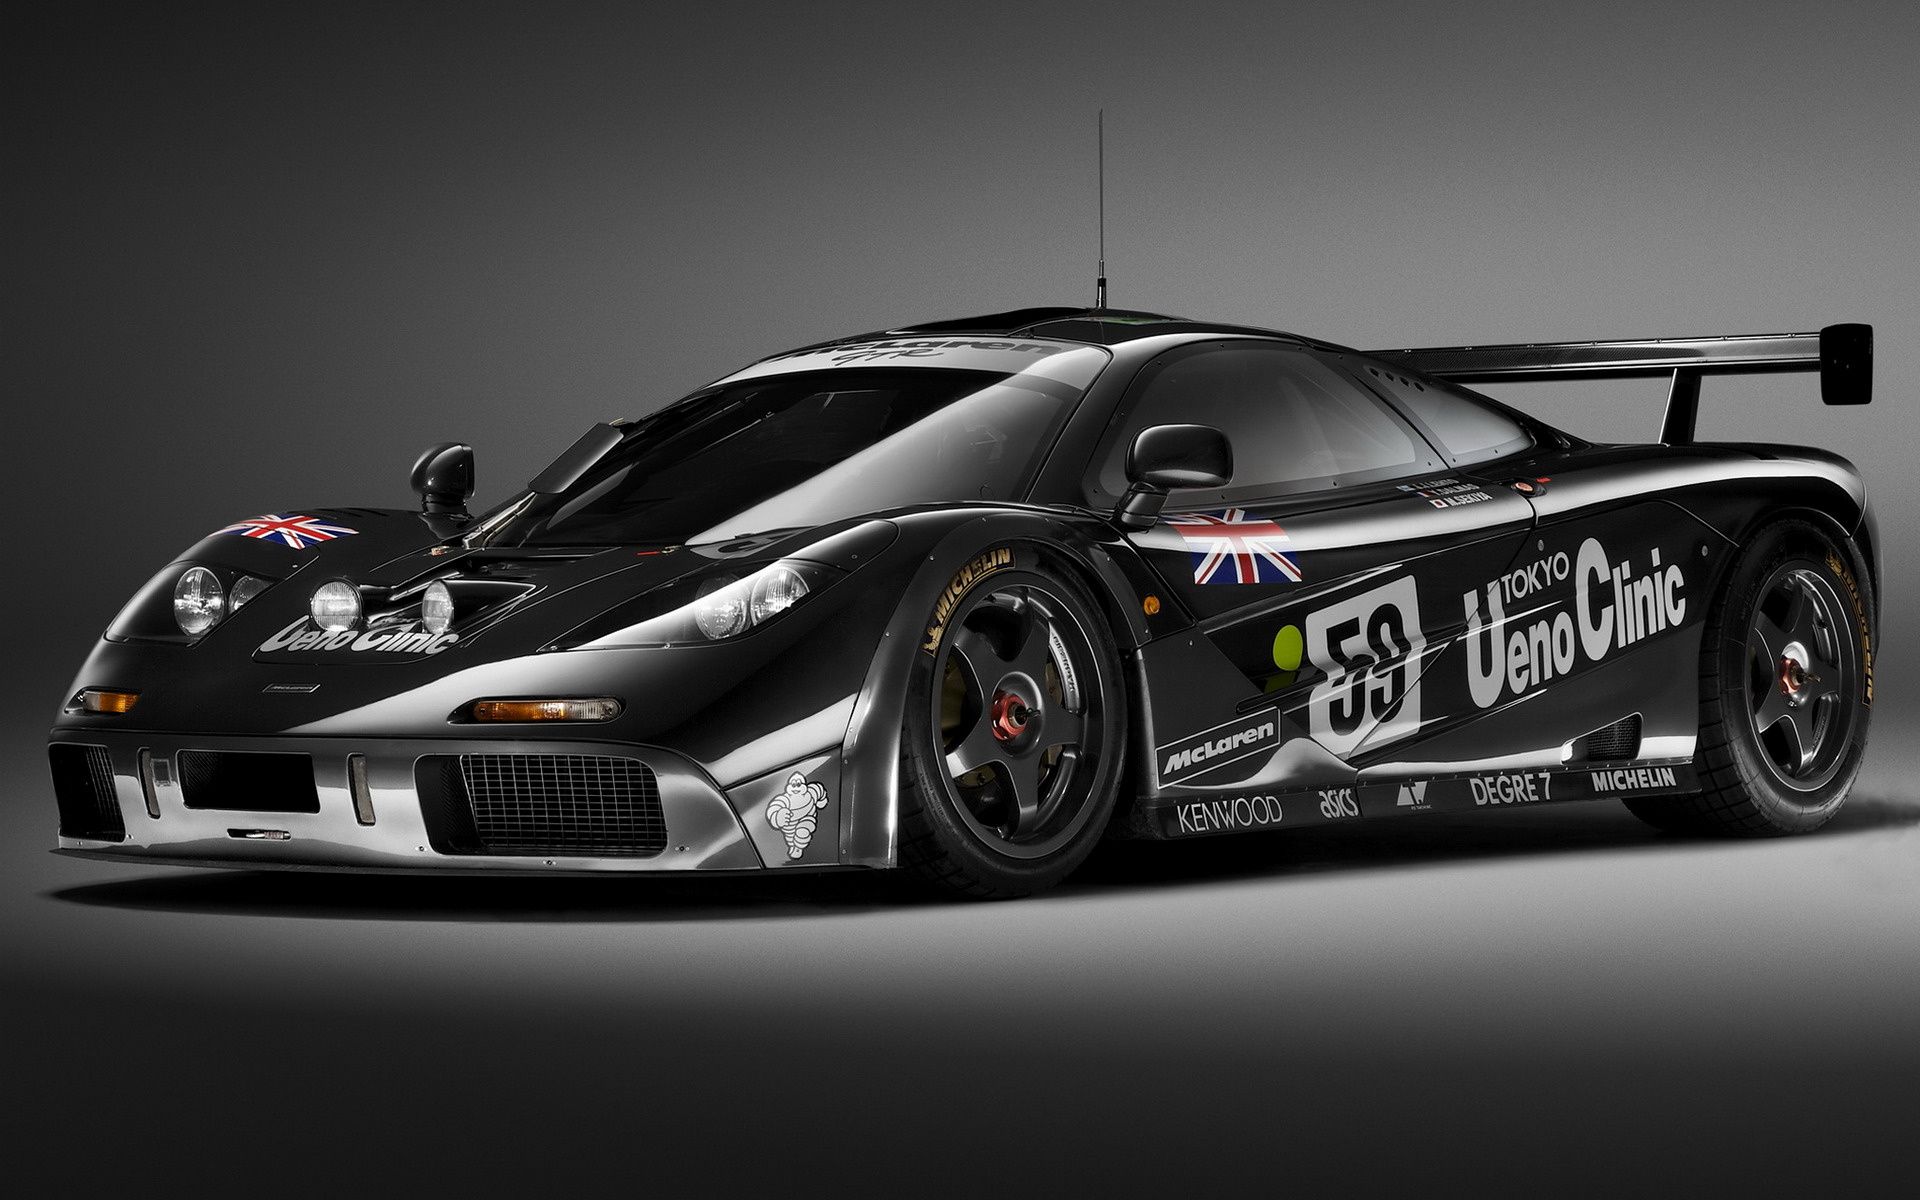 McLaren F1 GTR and HD Image